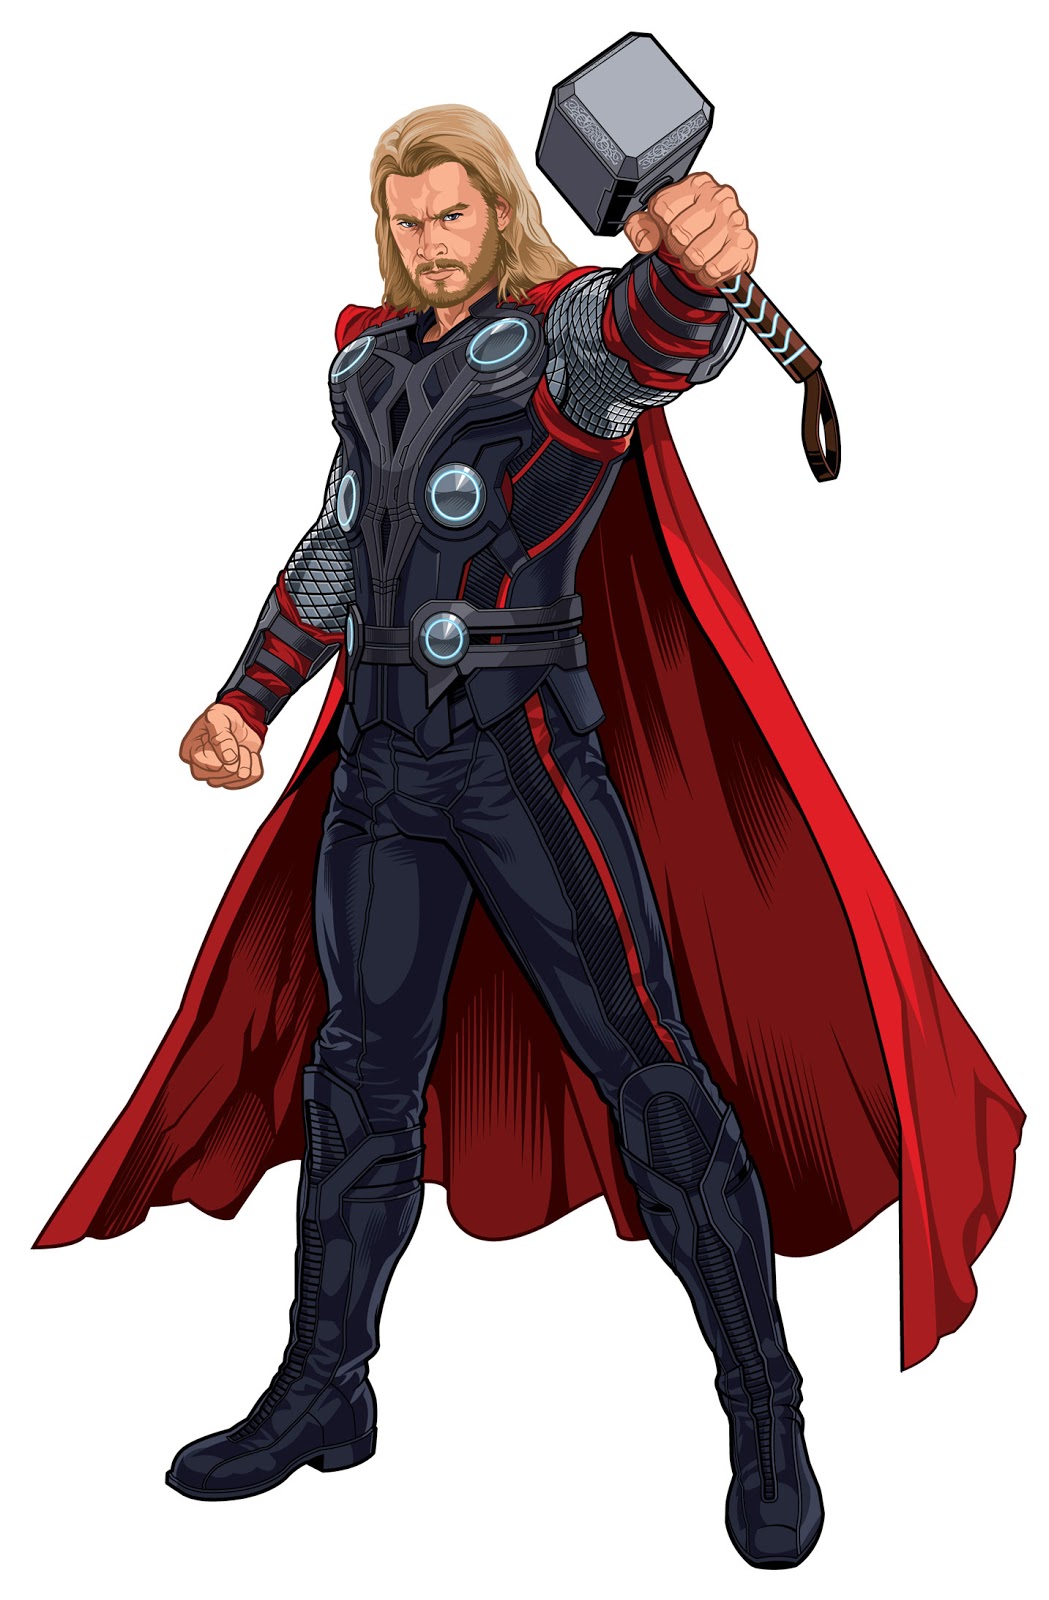 knowlesart: Thor (Avengers movie) vector interpretations